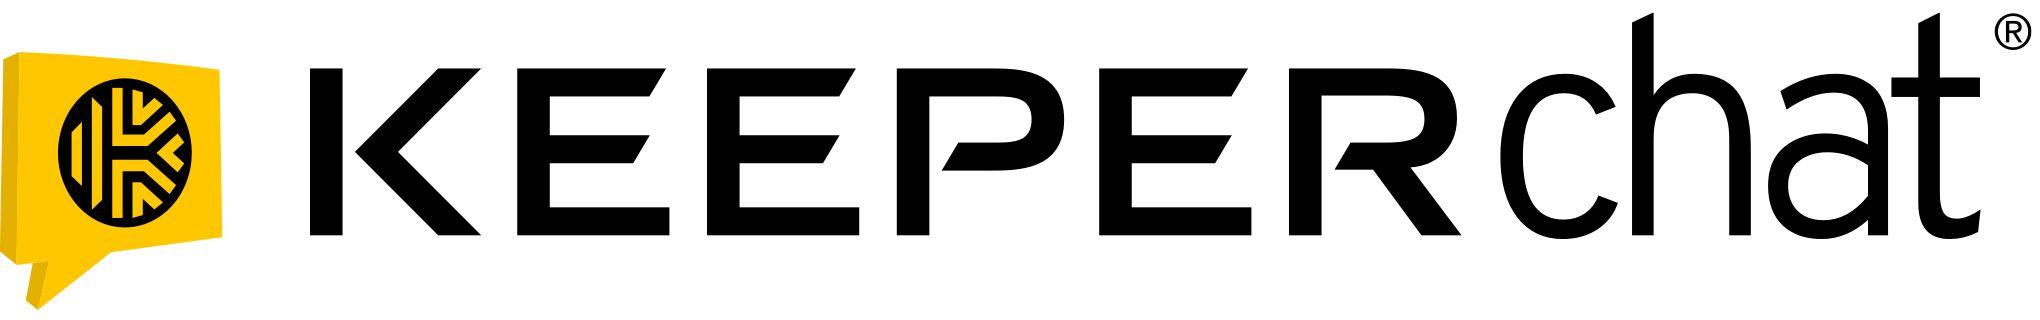 Keeper Logo - A Brand New Look for Keeper - Keeper Blog